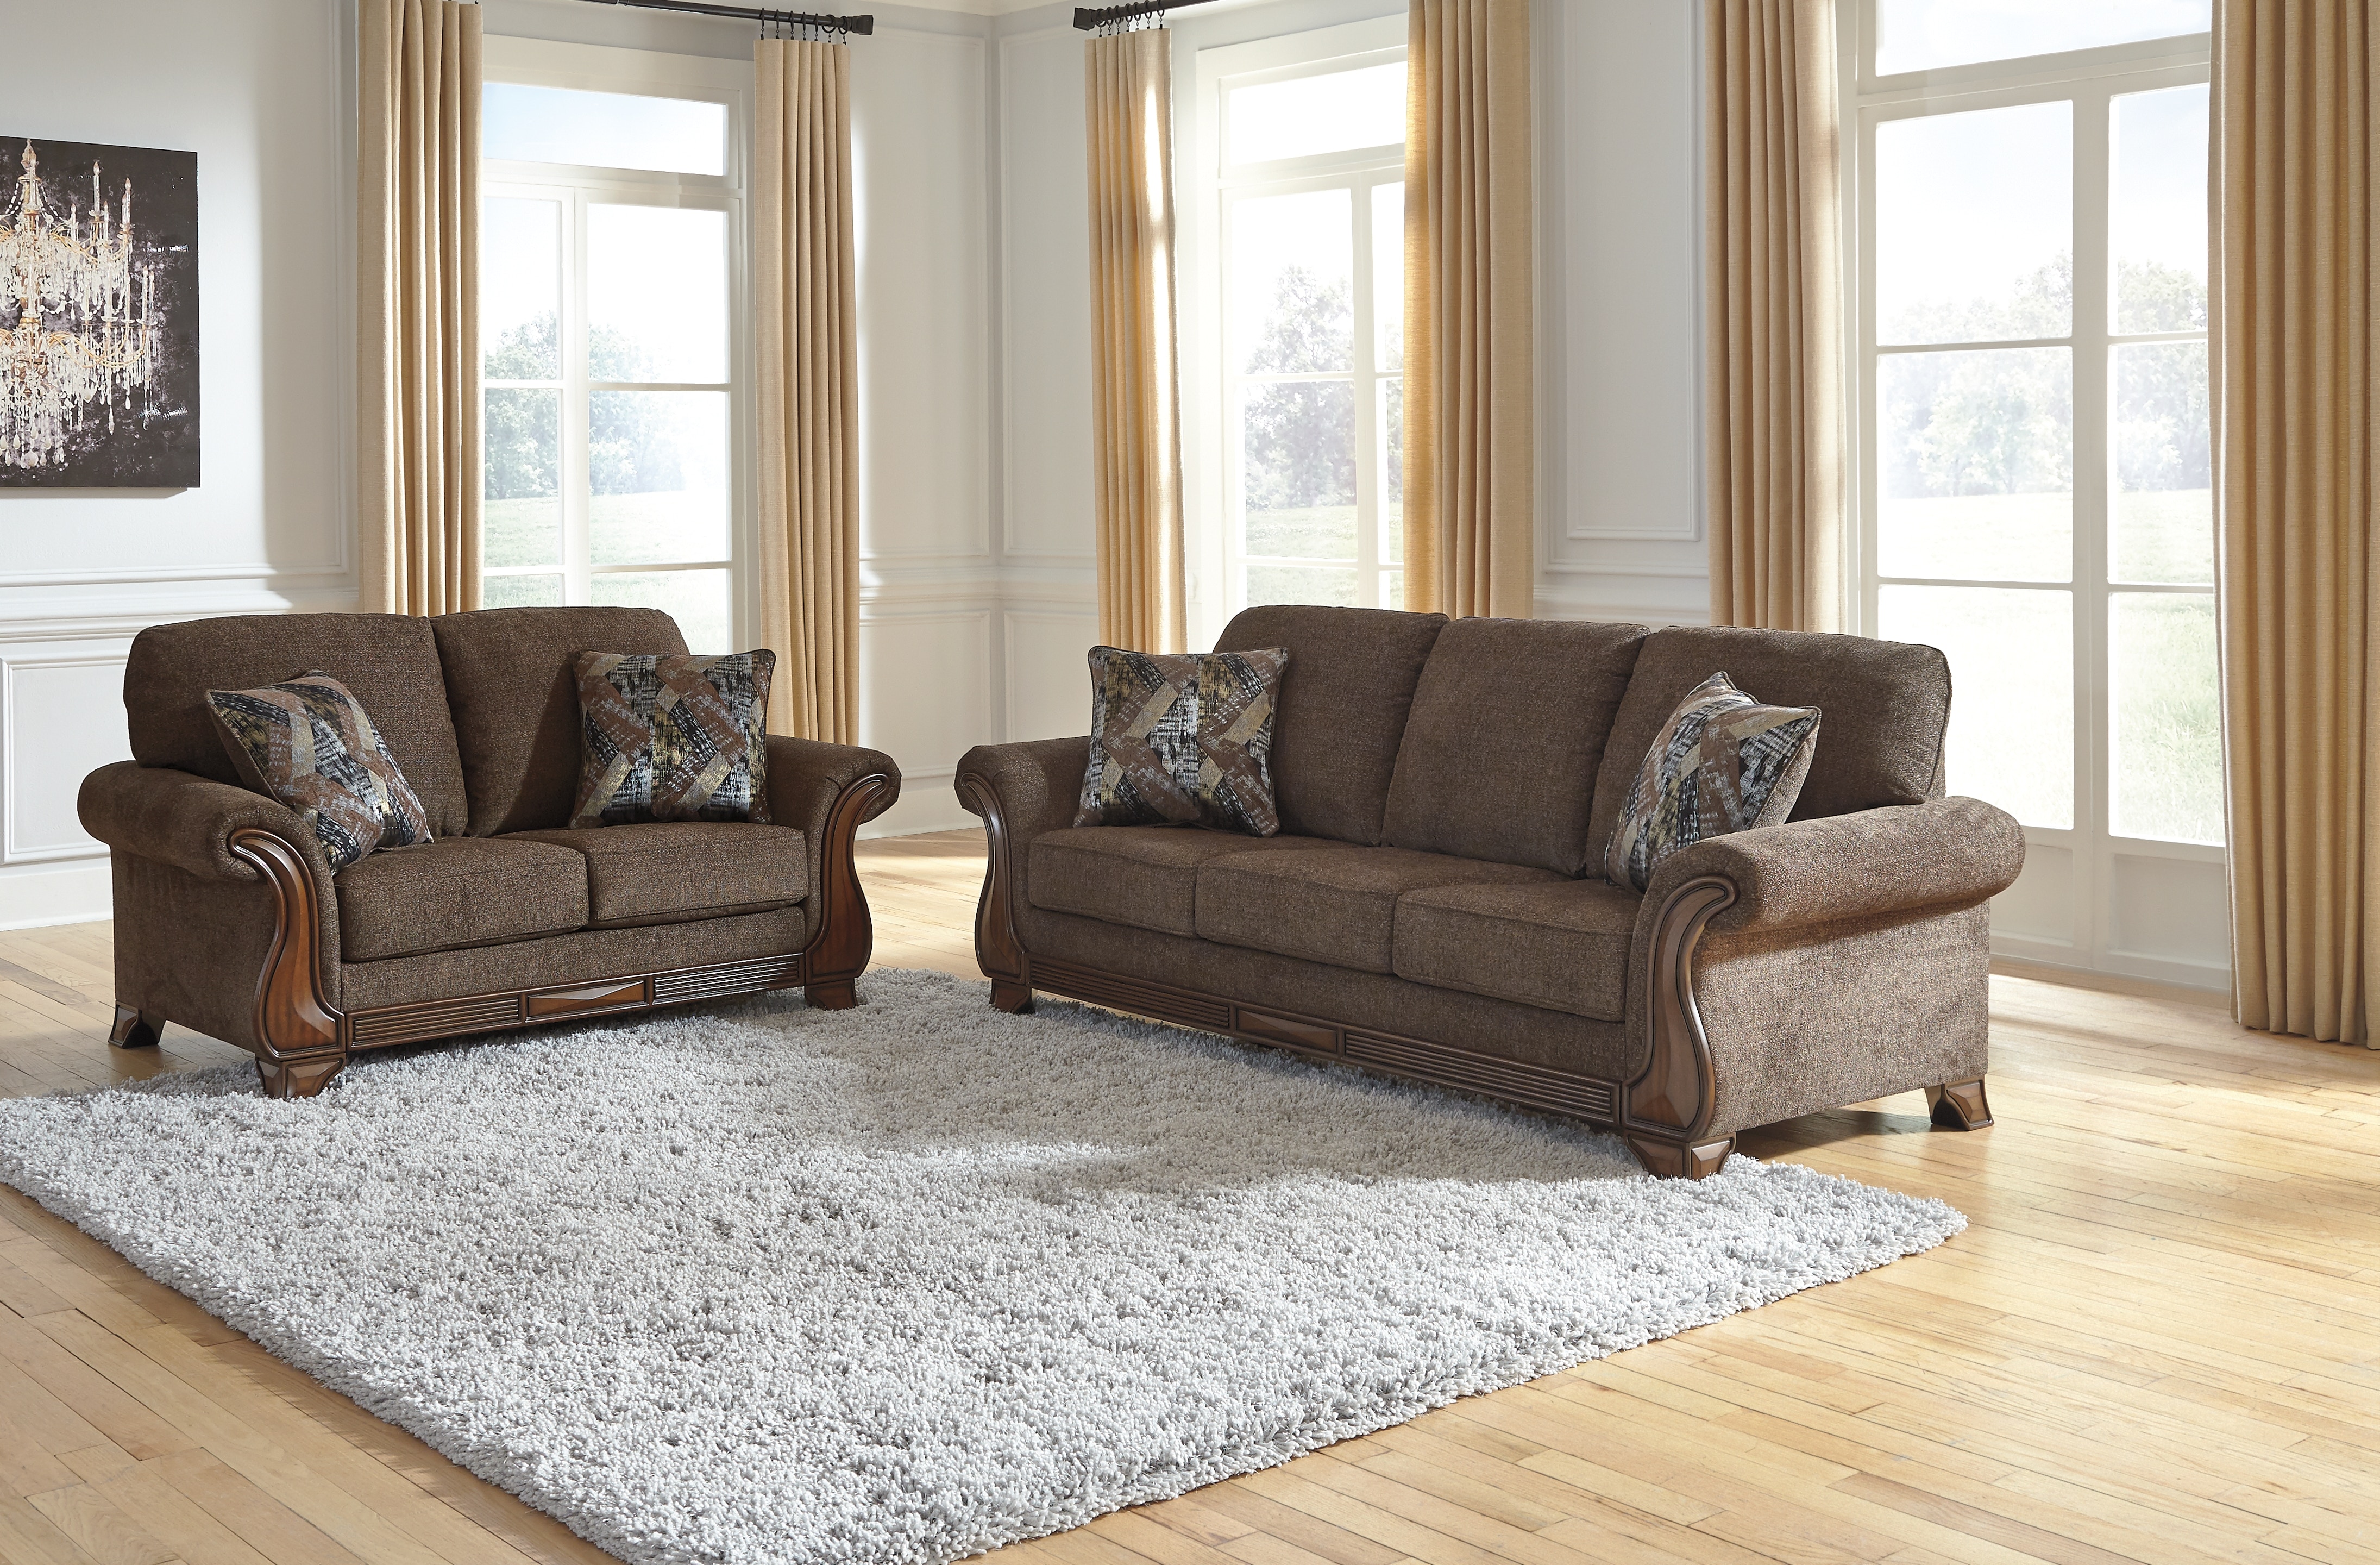 Sofa - The Loveseat Furniture Company 85506U1 and Living Cleveland Room Benchcraft Miltonwood